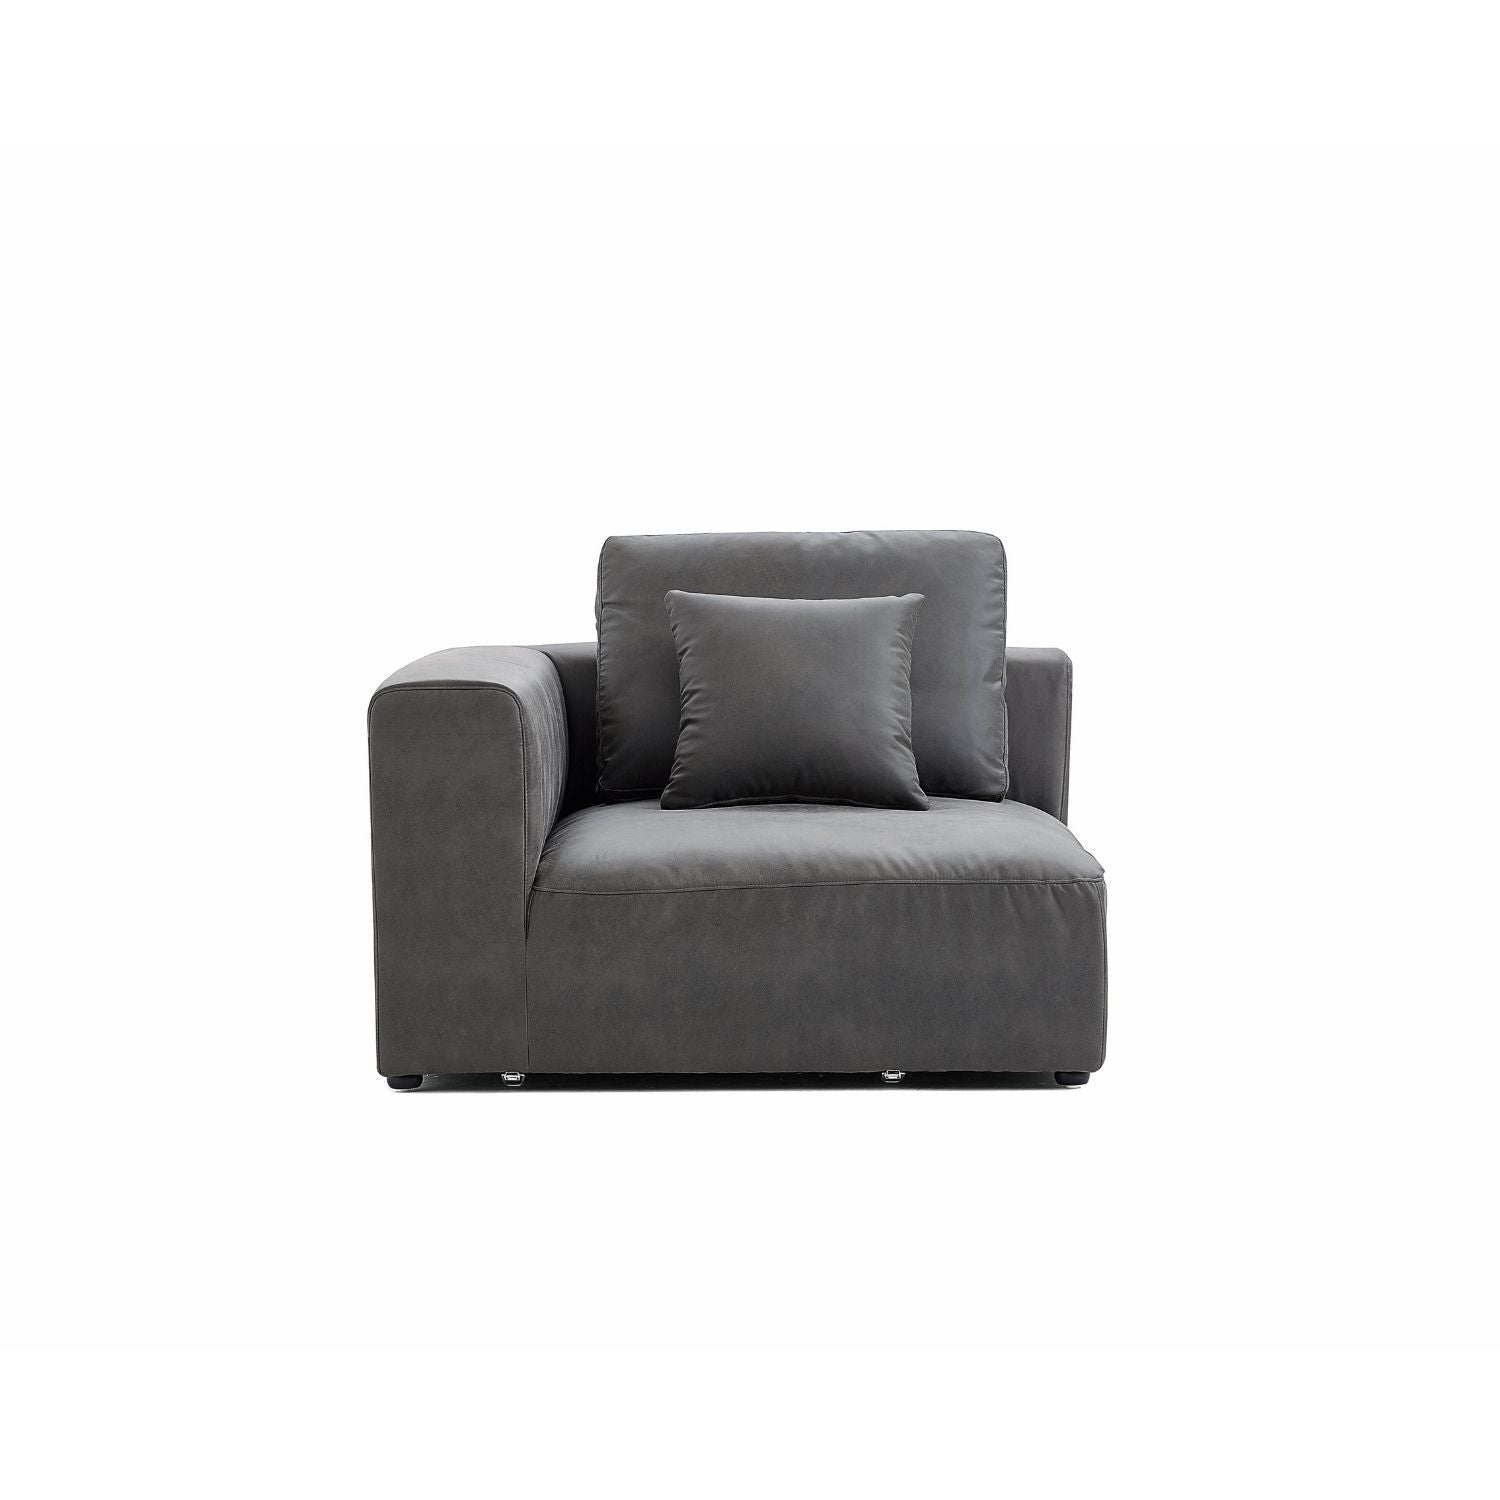 The 5th - Corner Seat Sofa Foundry Dark Grey 